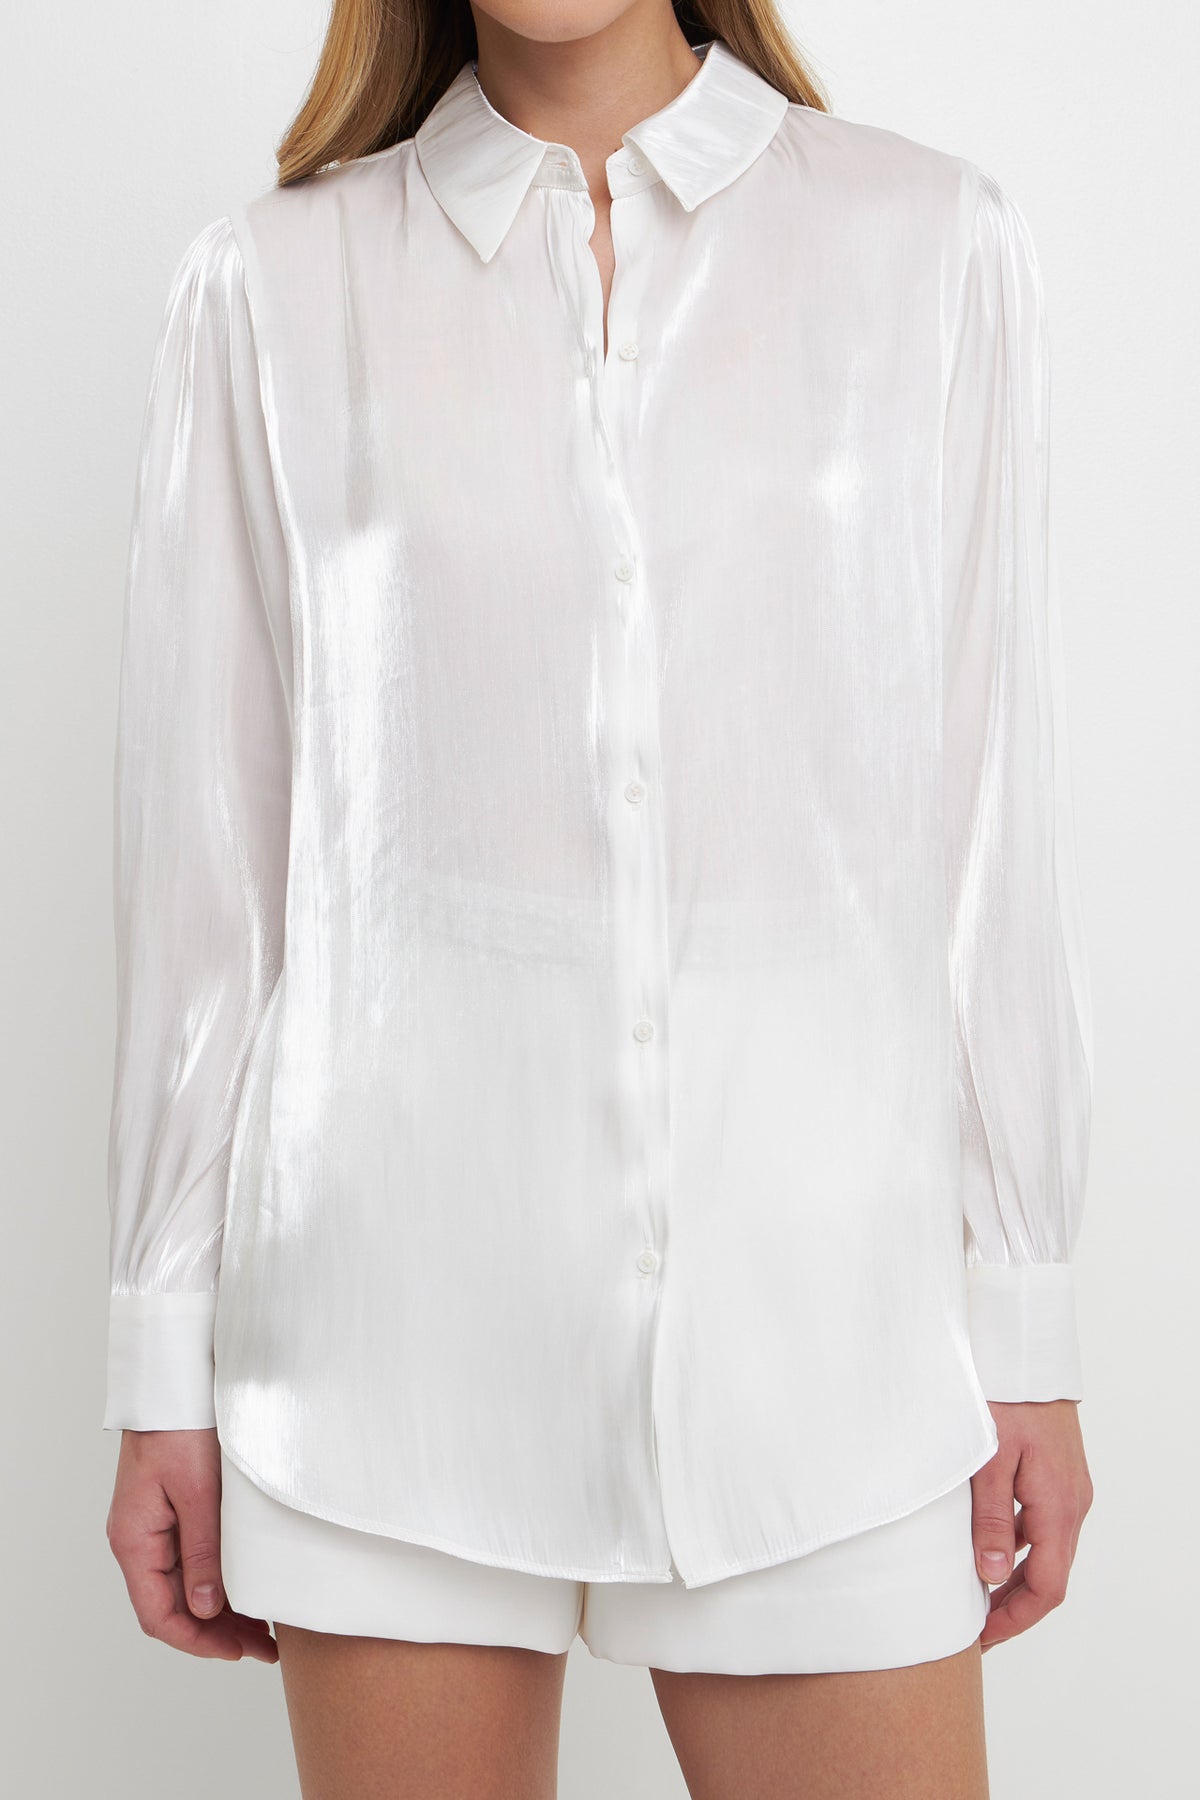 ENDLESS ROSE - Shiny Dress Shirt - SHIRTS & BLOUSES available at Objectrare